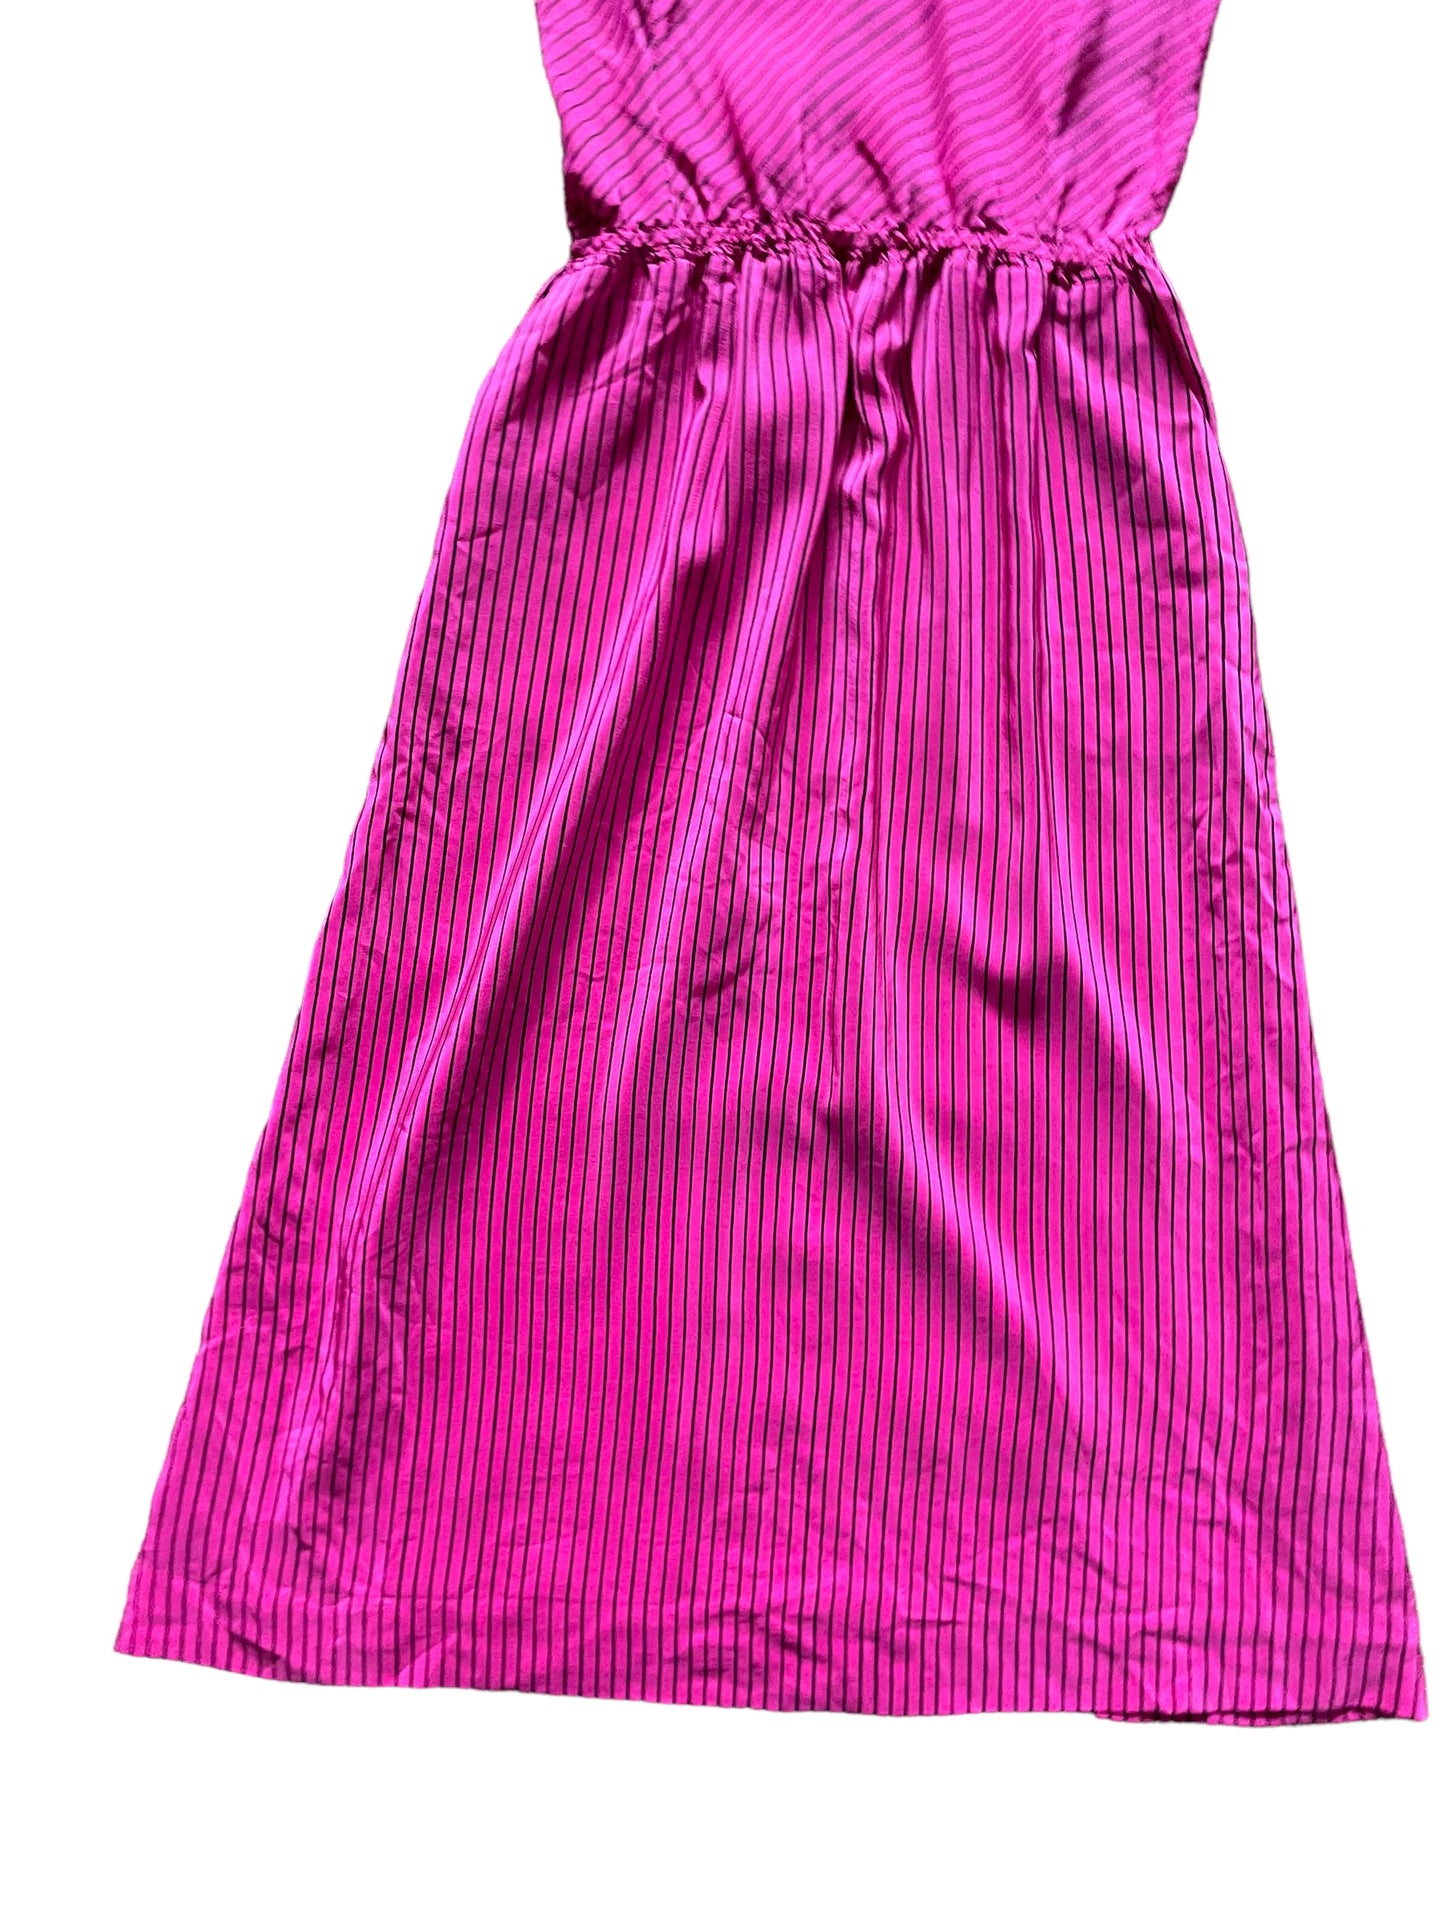 Front skirt view of Vintage 1980s Pink Dress w/ Black Stripes SZ XS  |  Barn Owl Vintage Dresses | Seattle Vintage Ladies Clothing